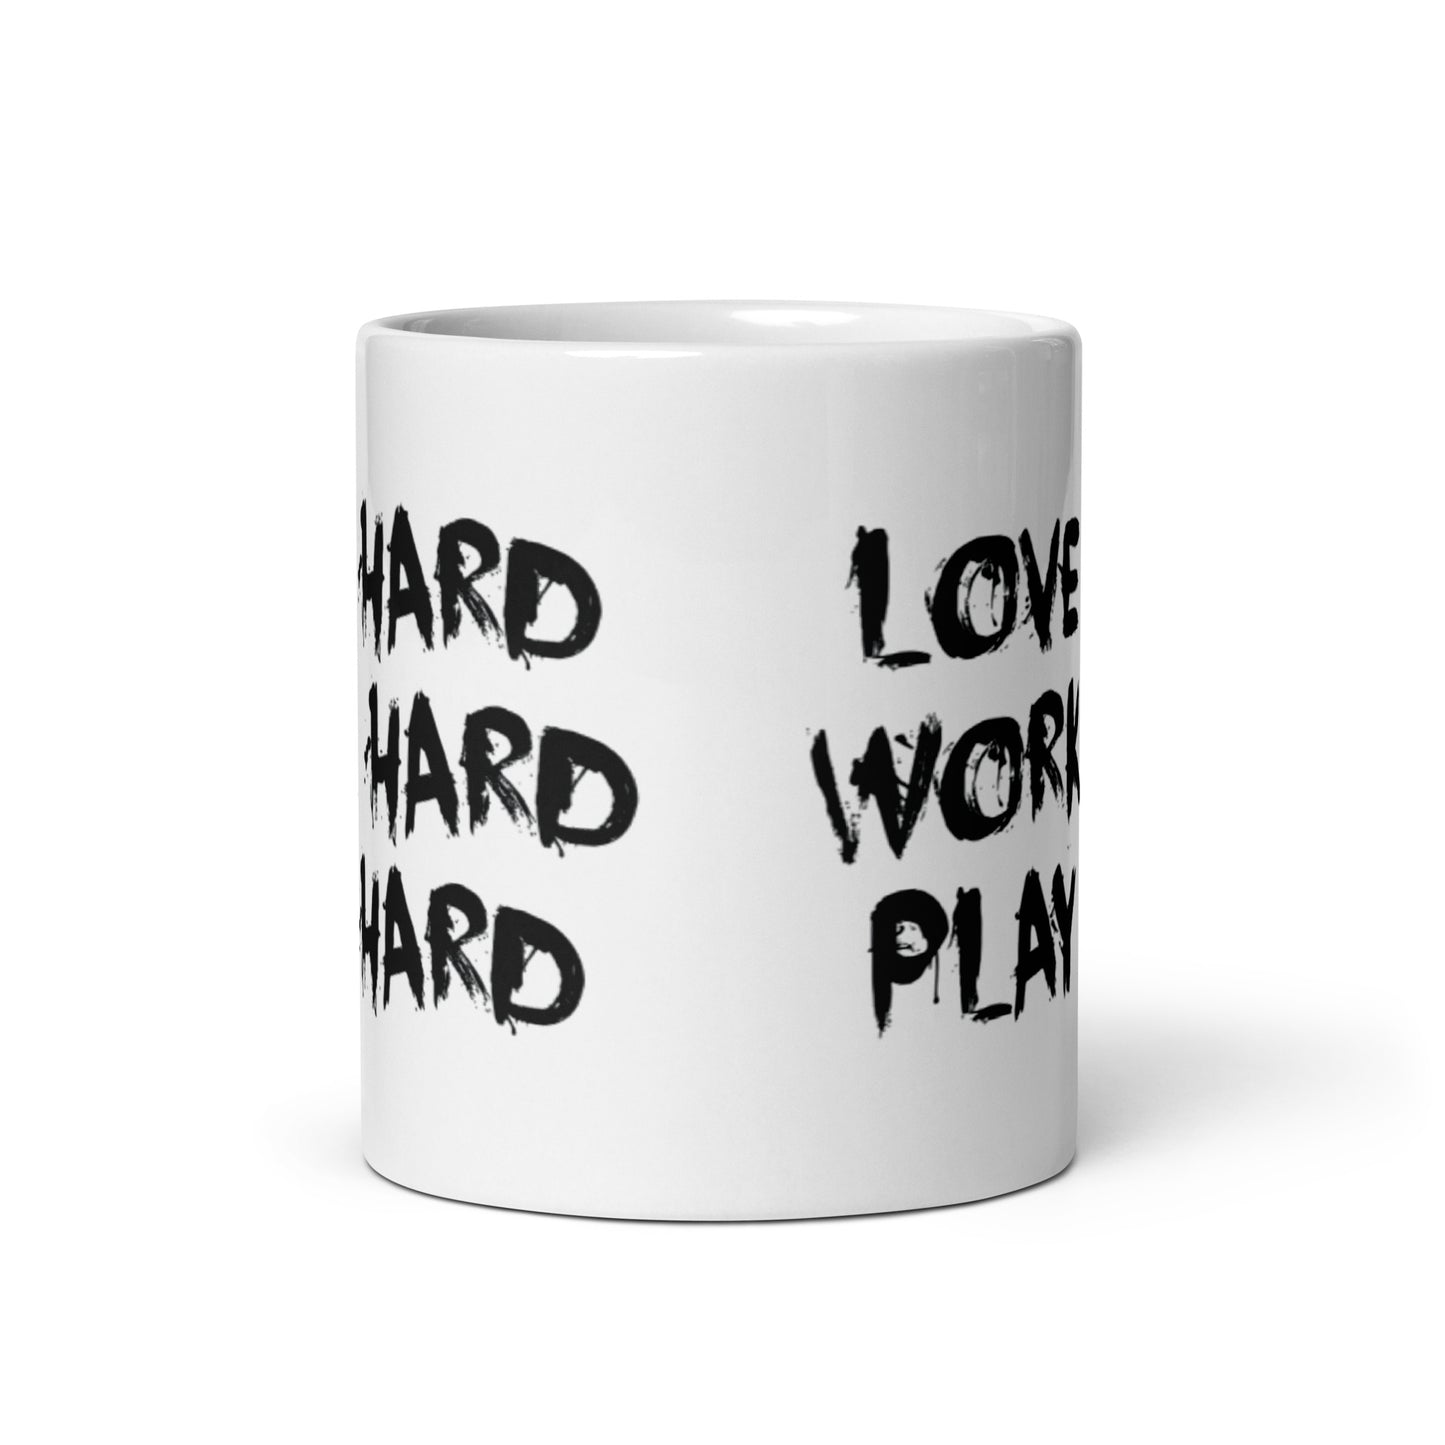 Love, Work, Play Hard - White glossy mug